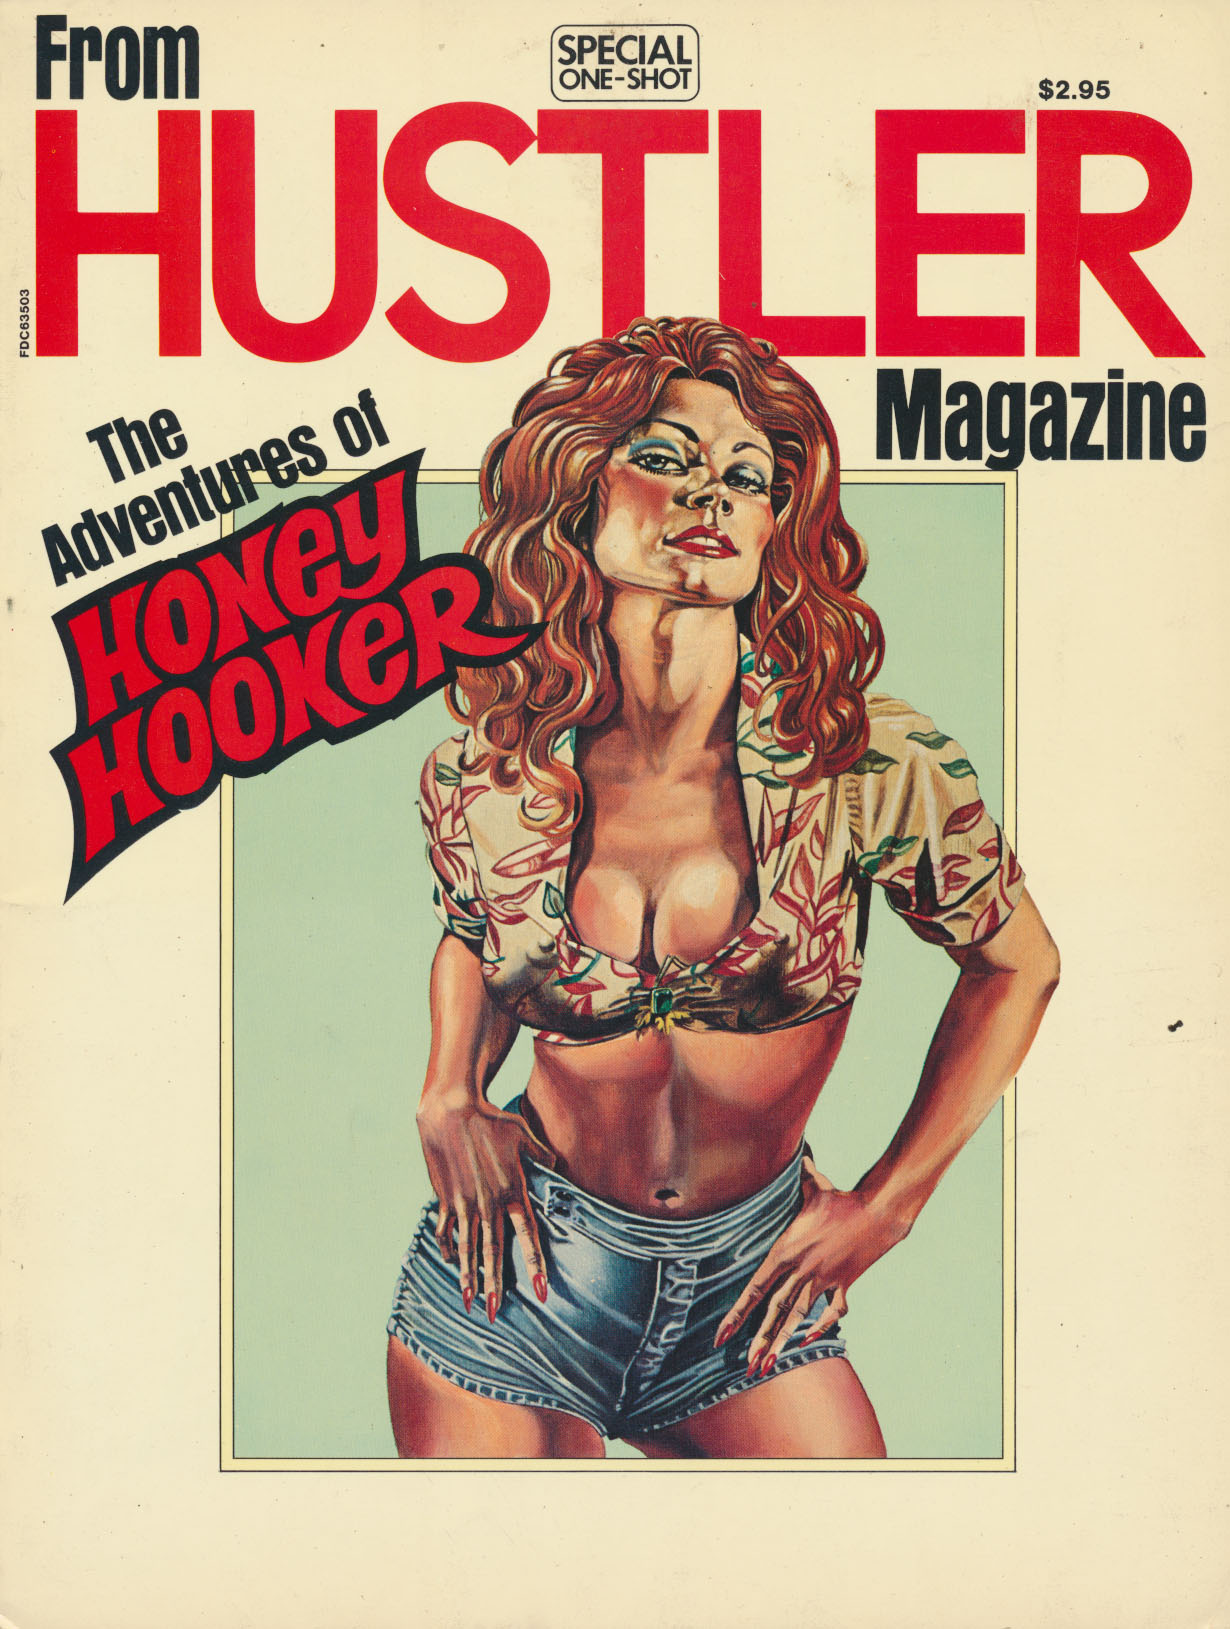 Hustler Special 1977, Honey Hooker magazine back issue Hustler magizine back copy 